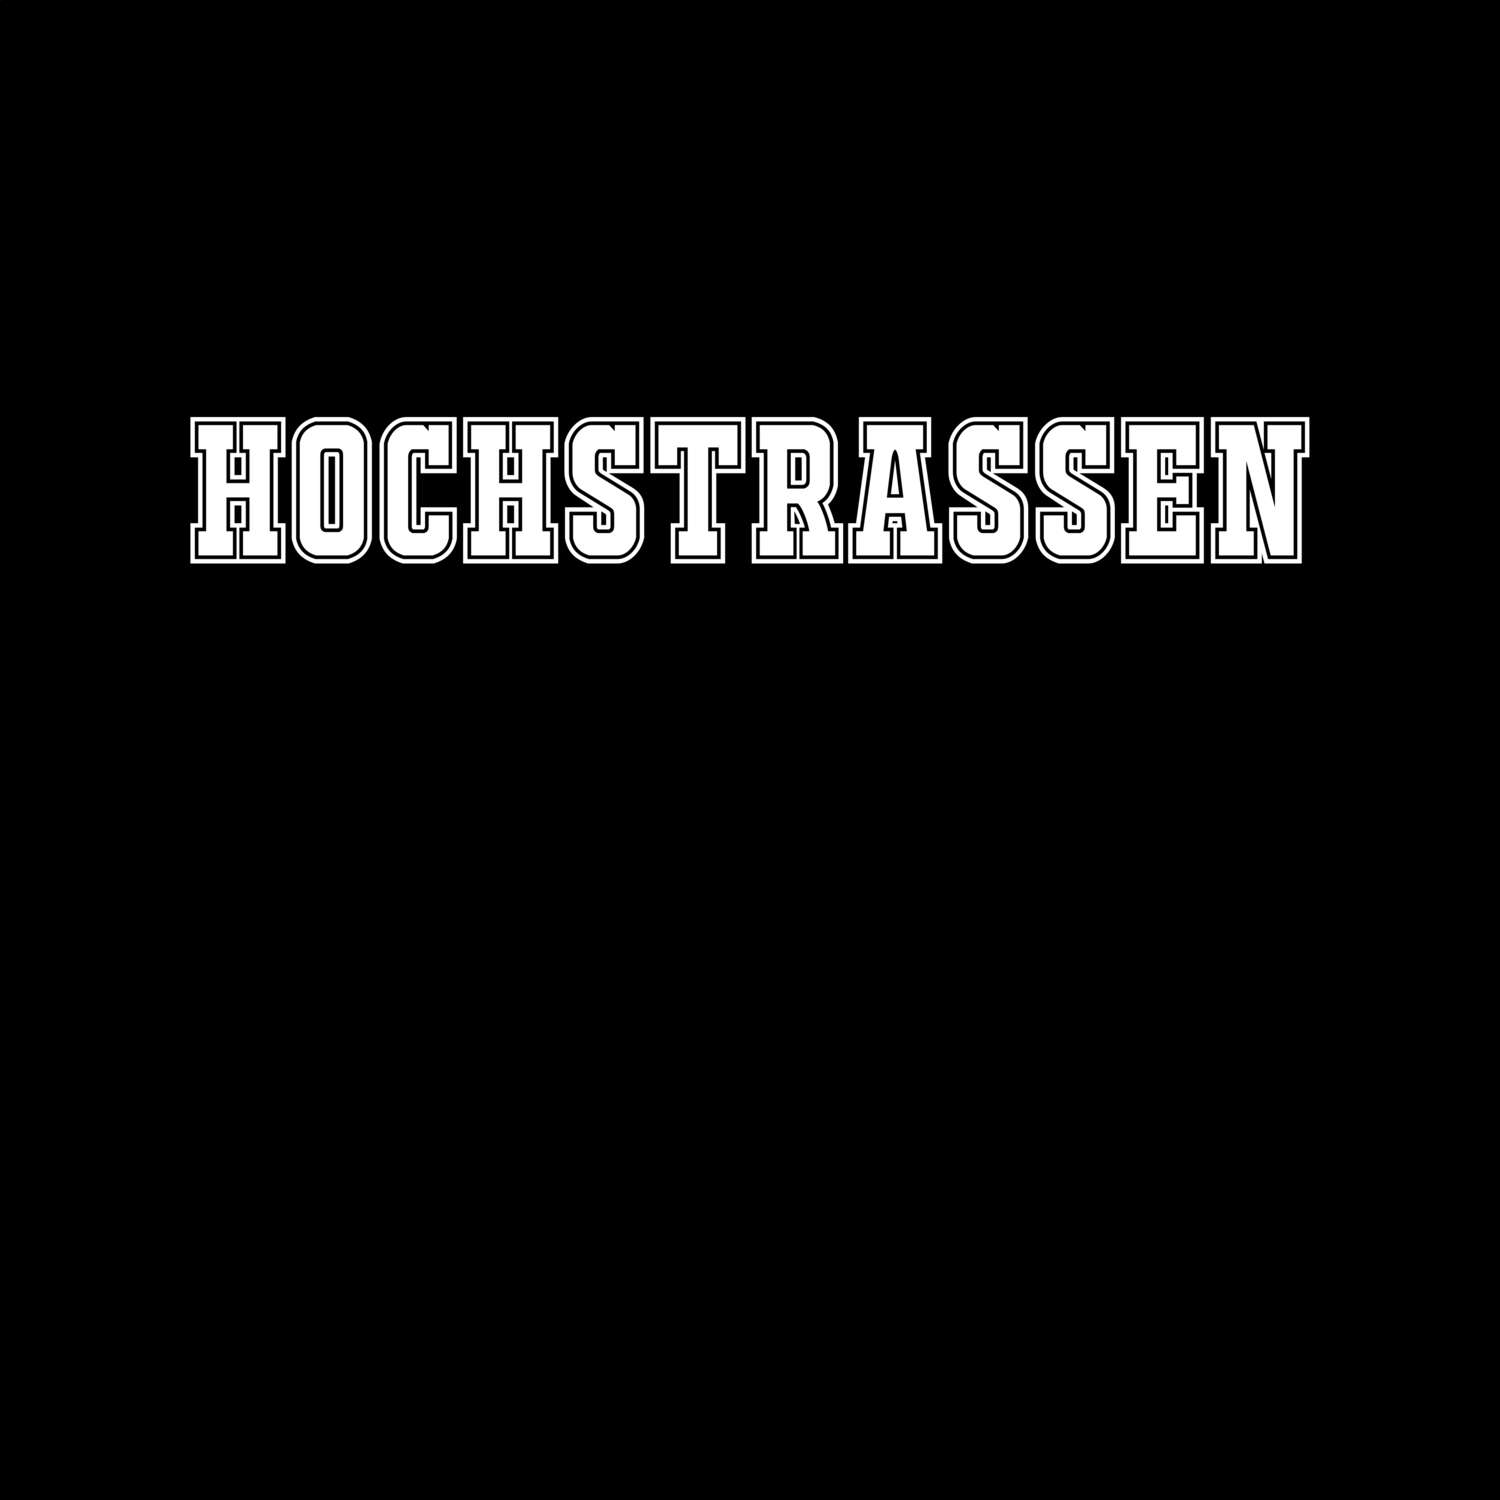 Hochstraßen T-Shirt »Classic«